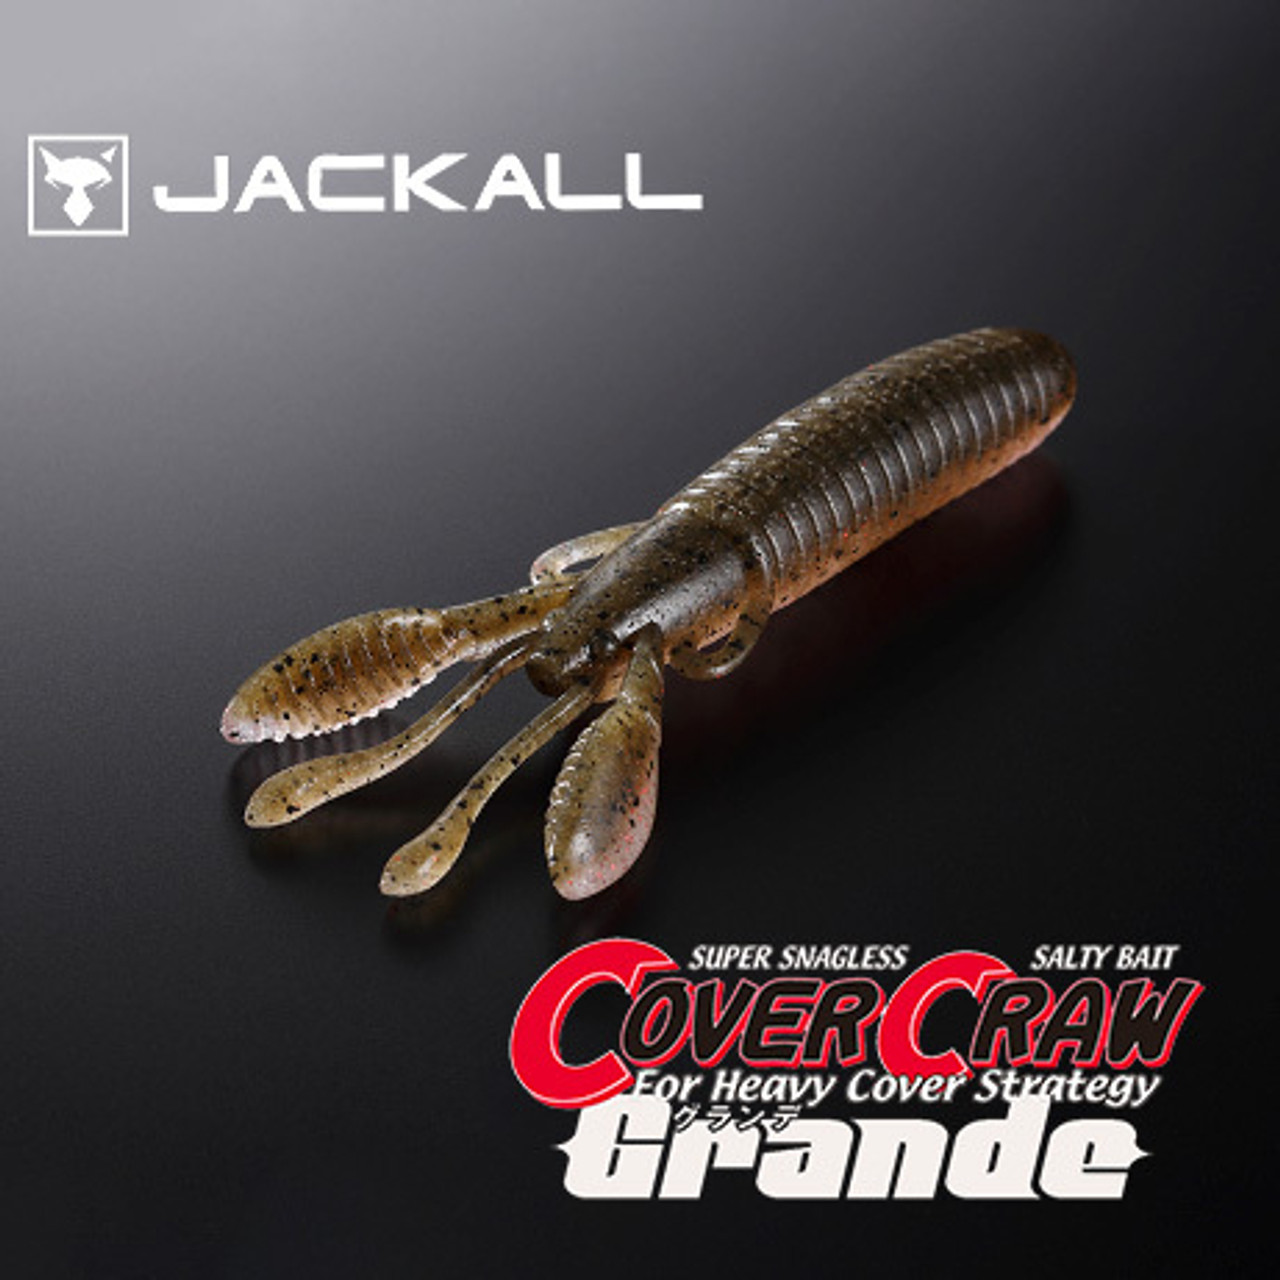 Jackall COVER CRAW GRANDE 4.5 NEW